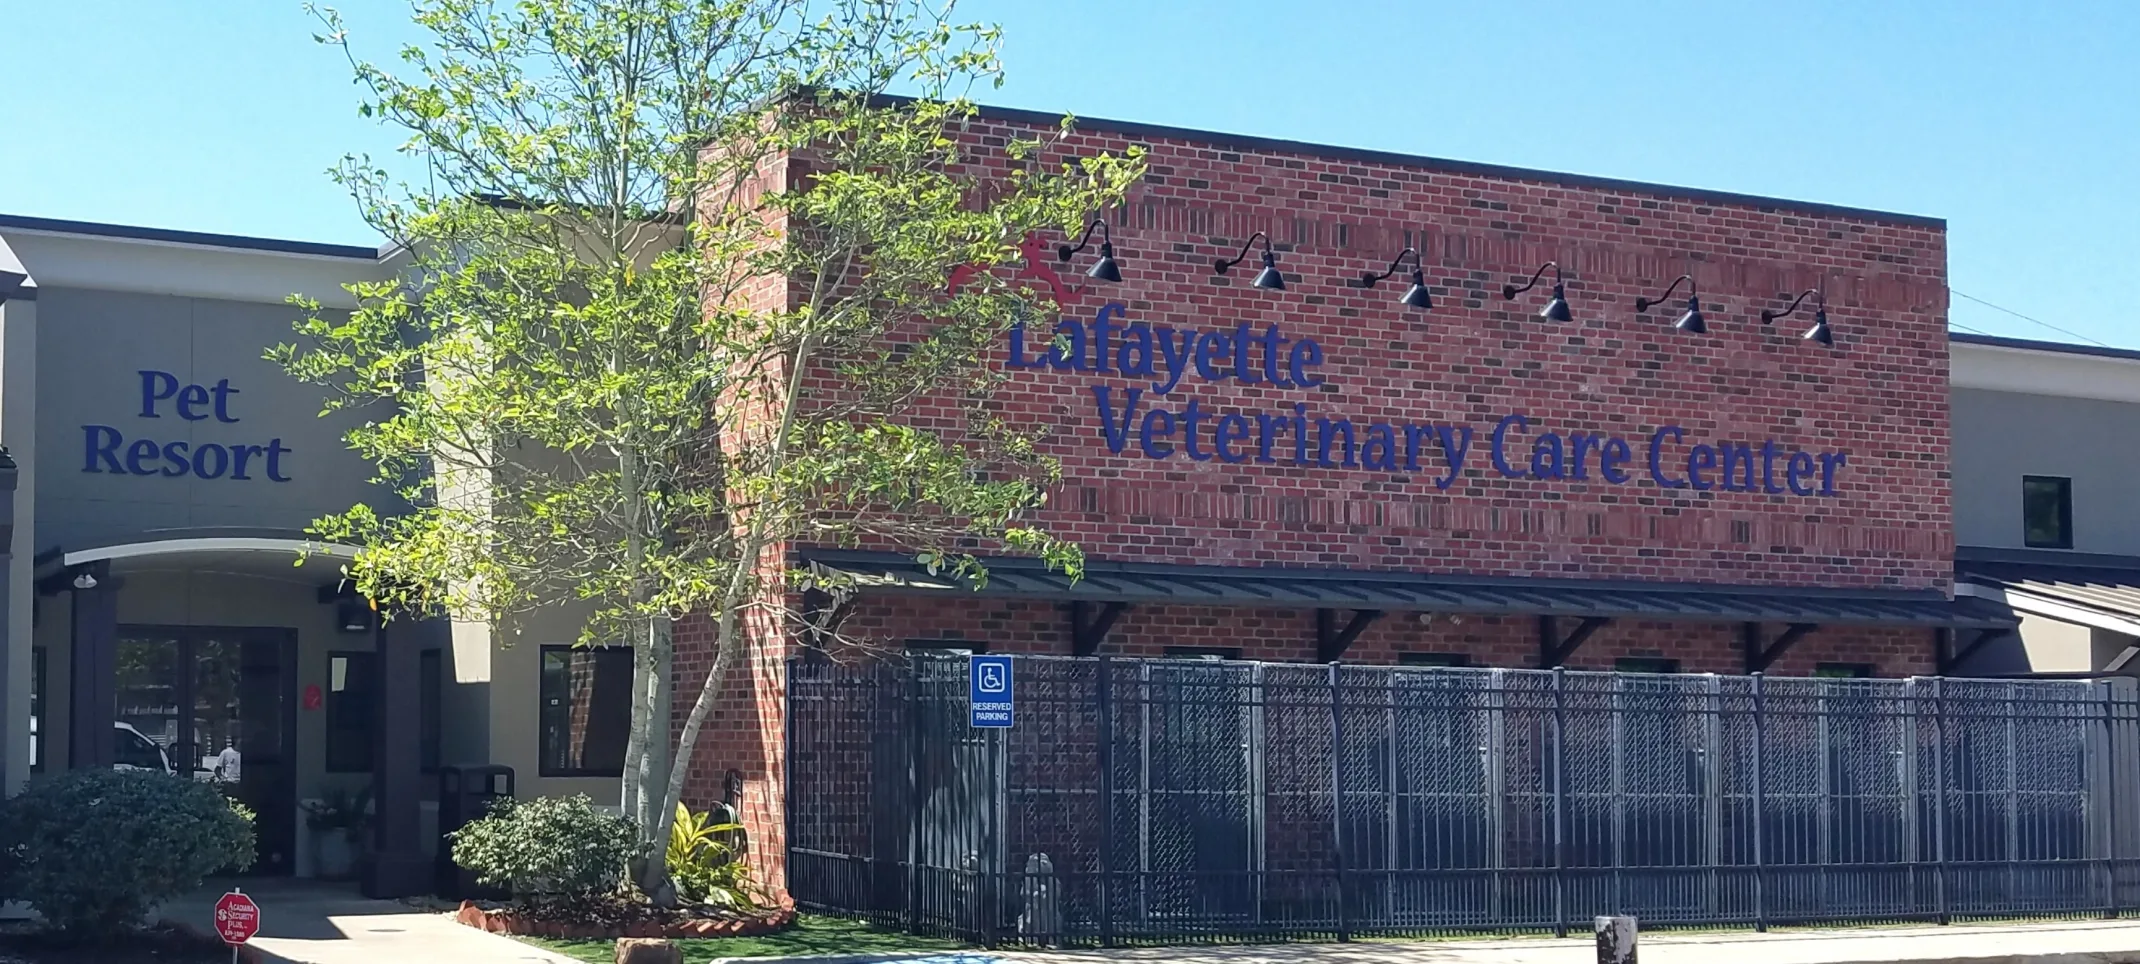 Lafayette Veterinary Care Center's kennels, outside